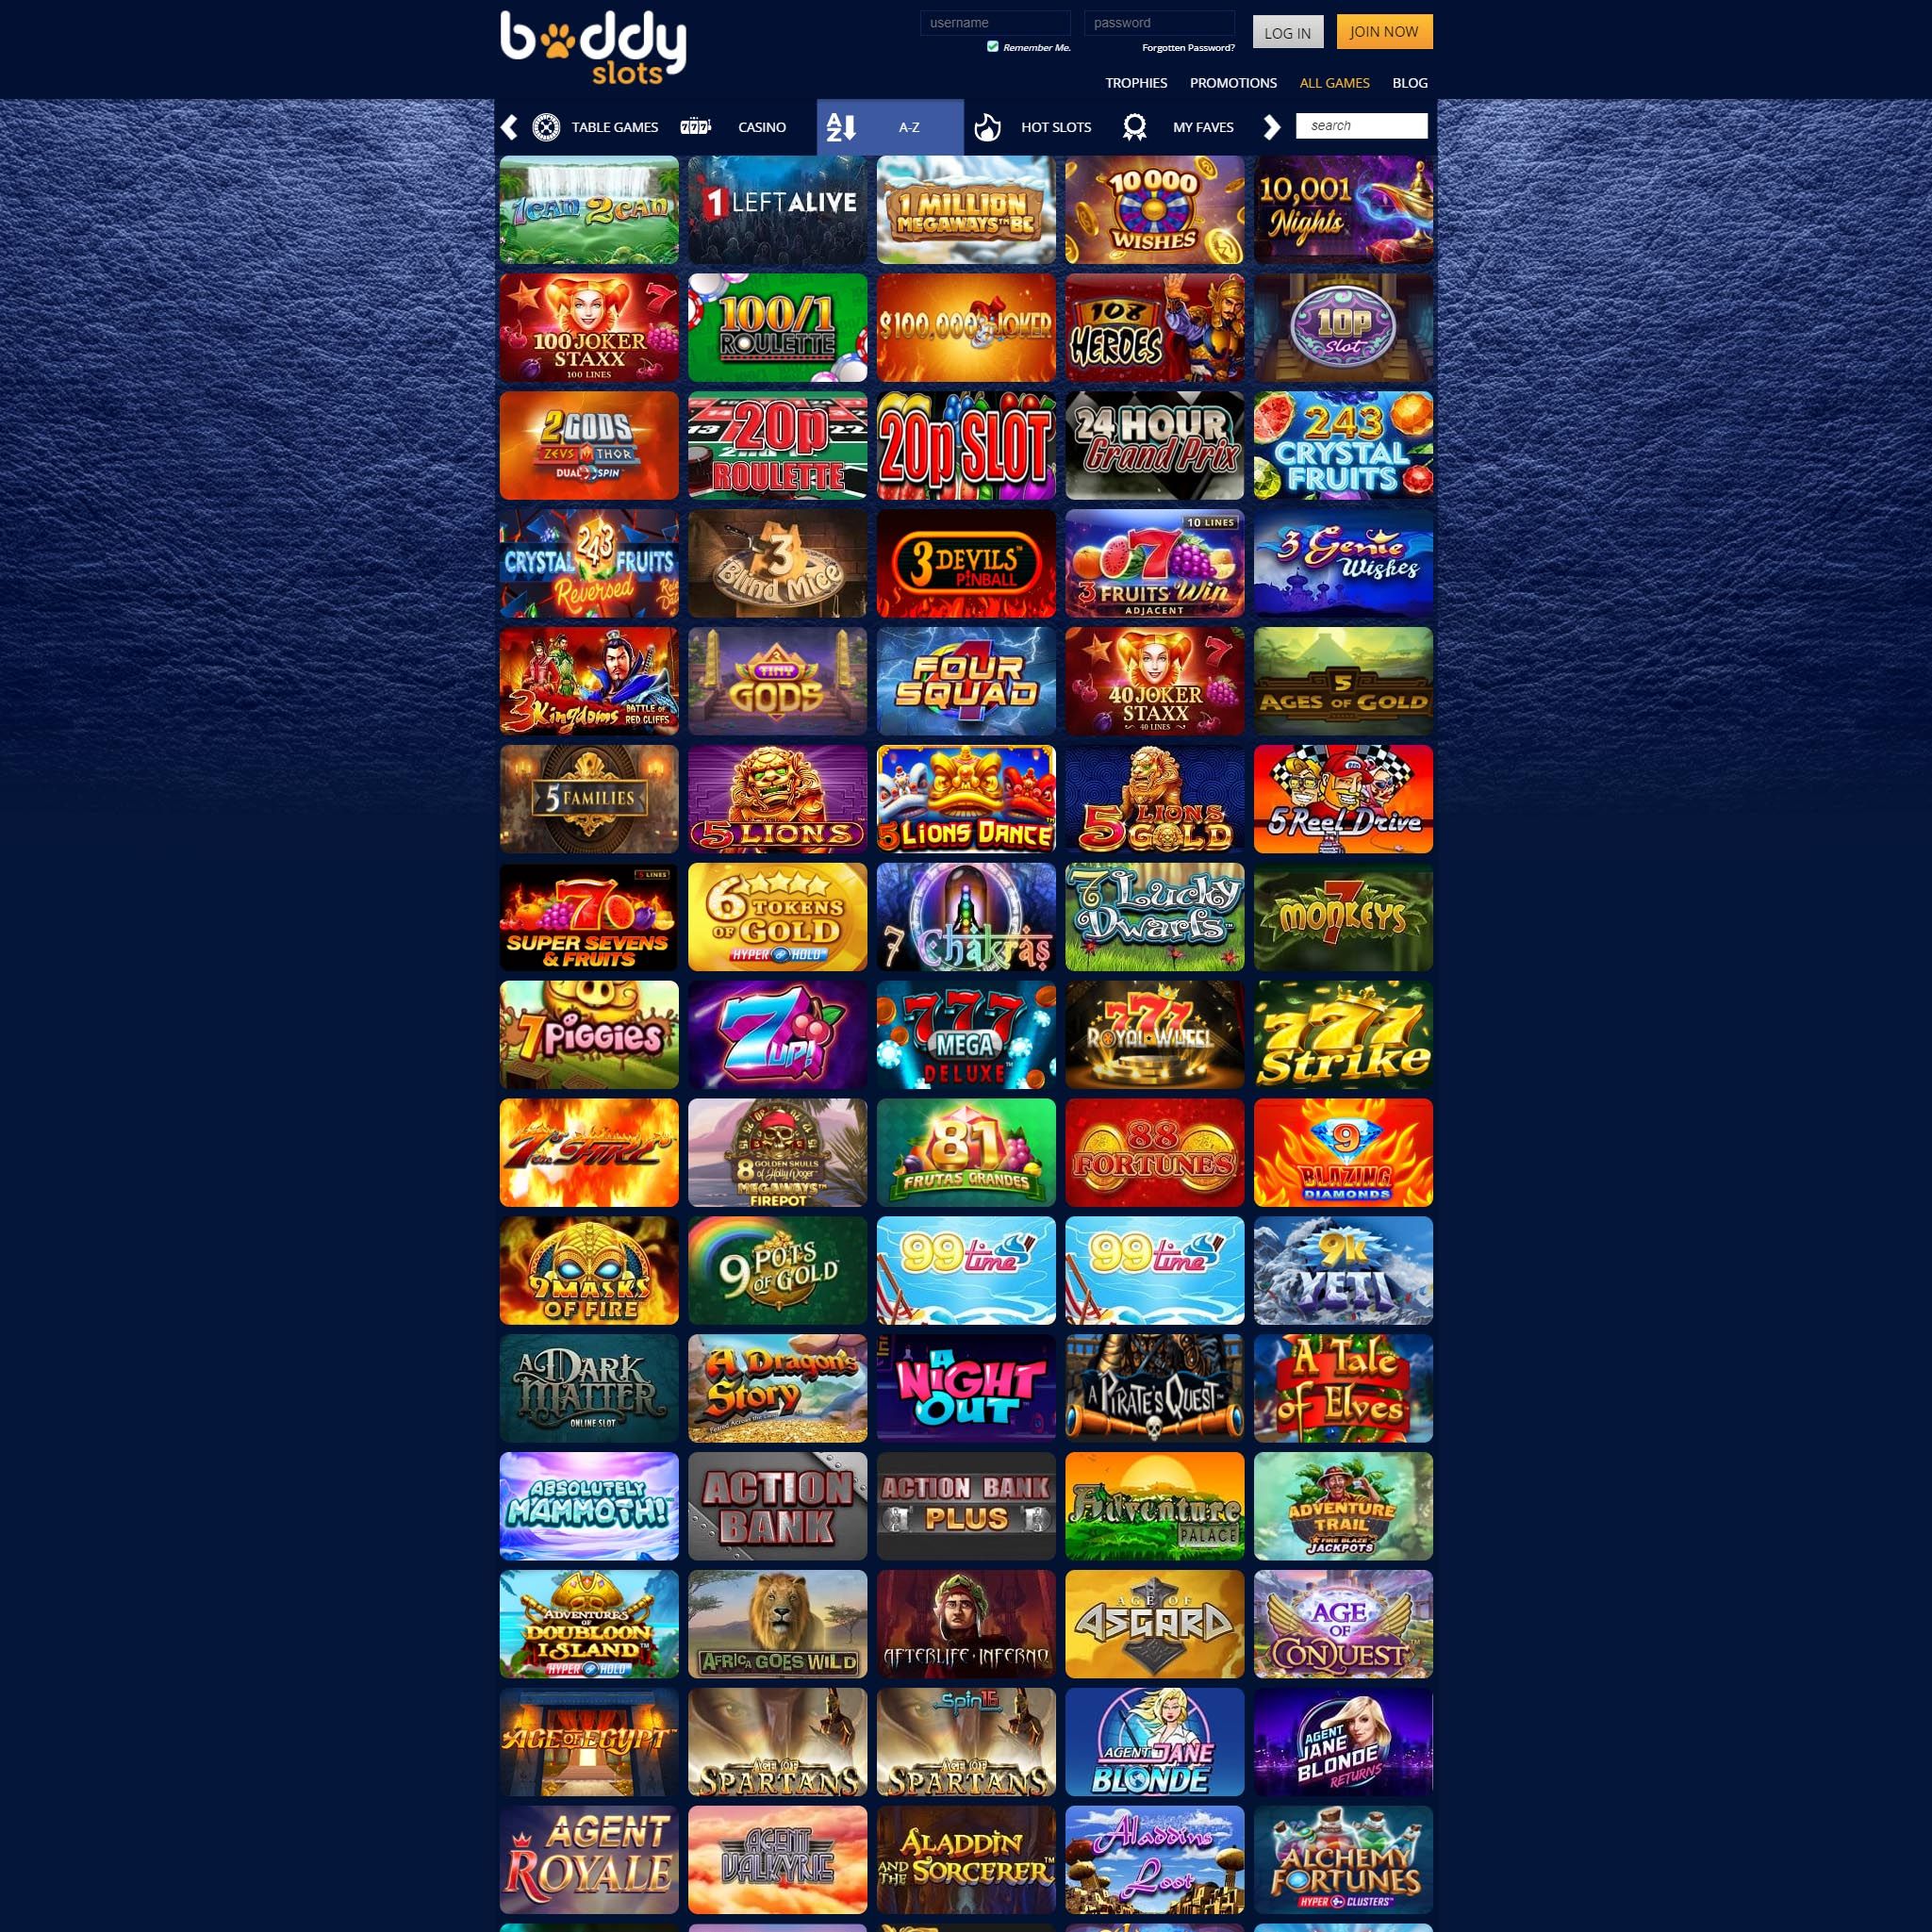 BuddySlots Casino full games catalogue